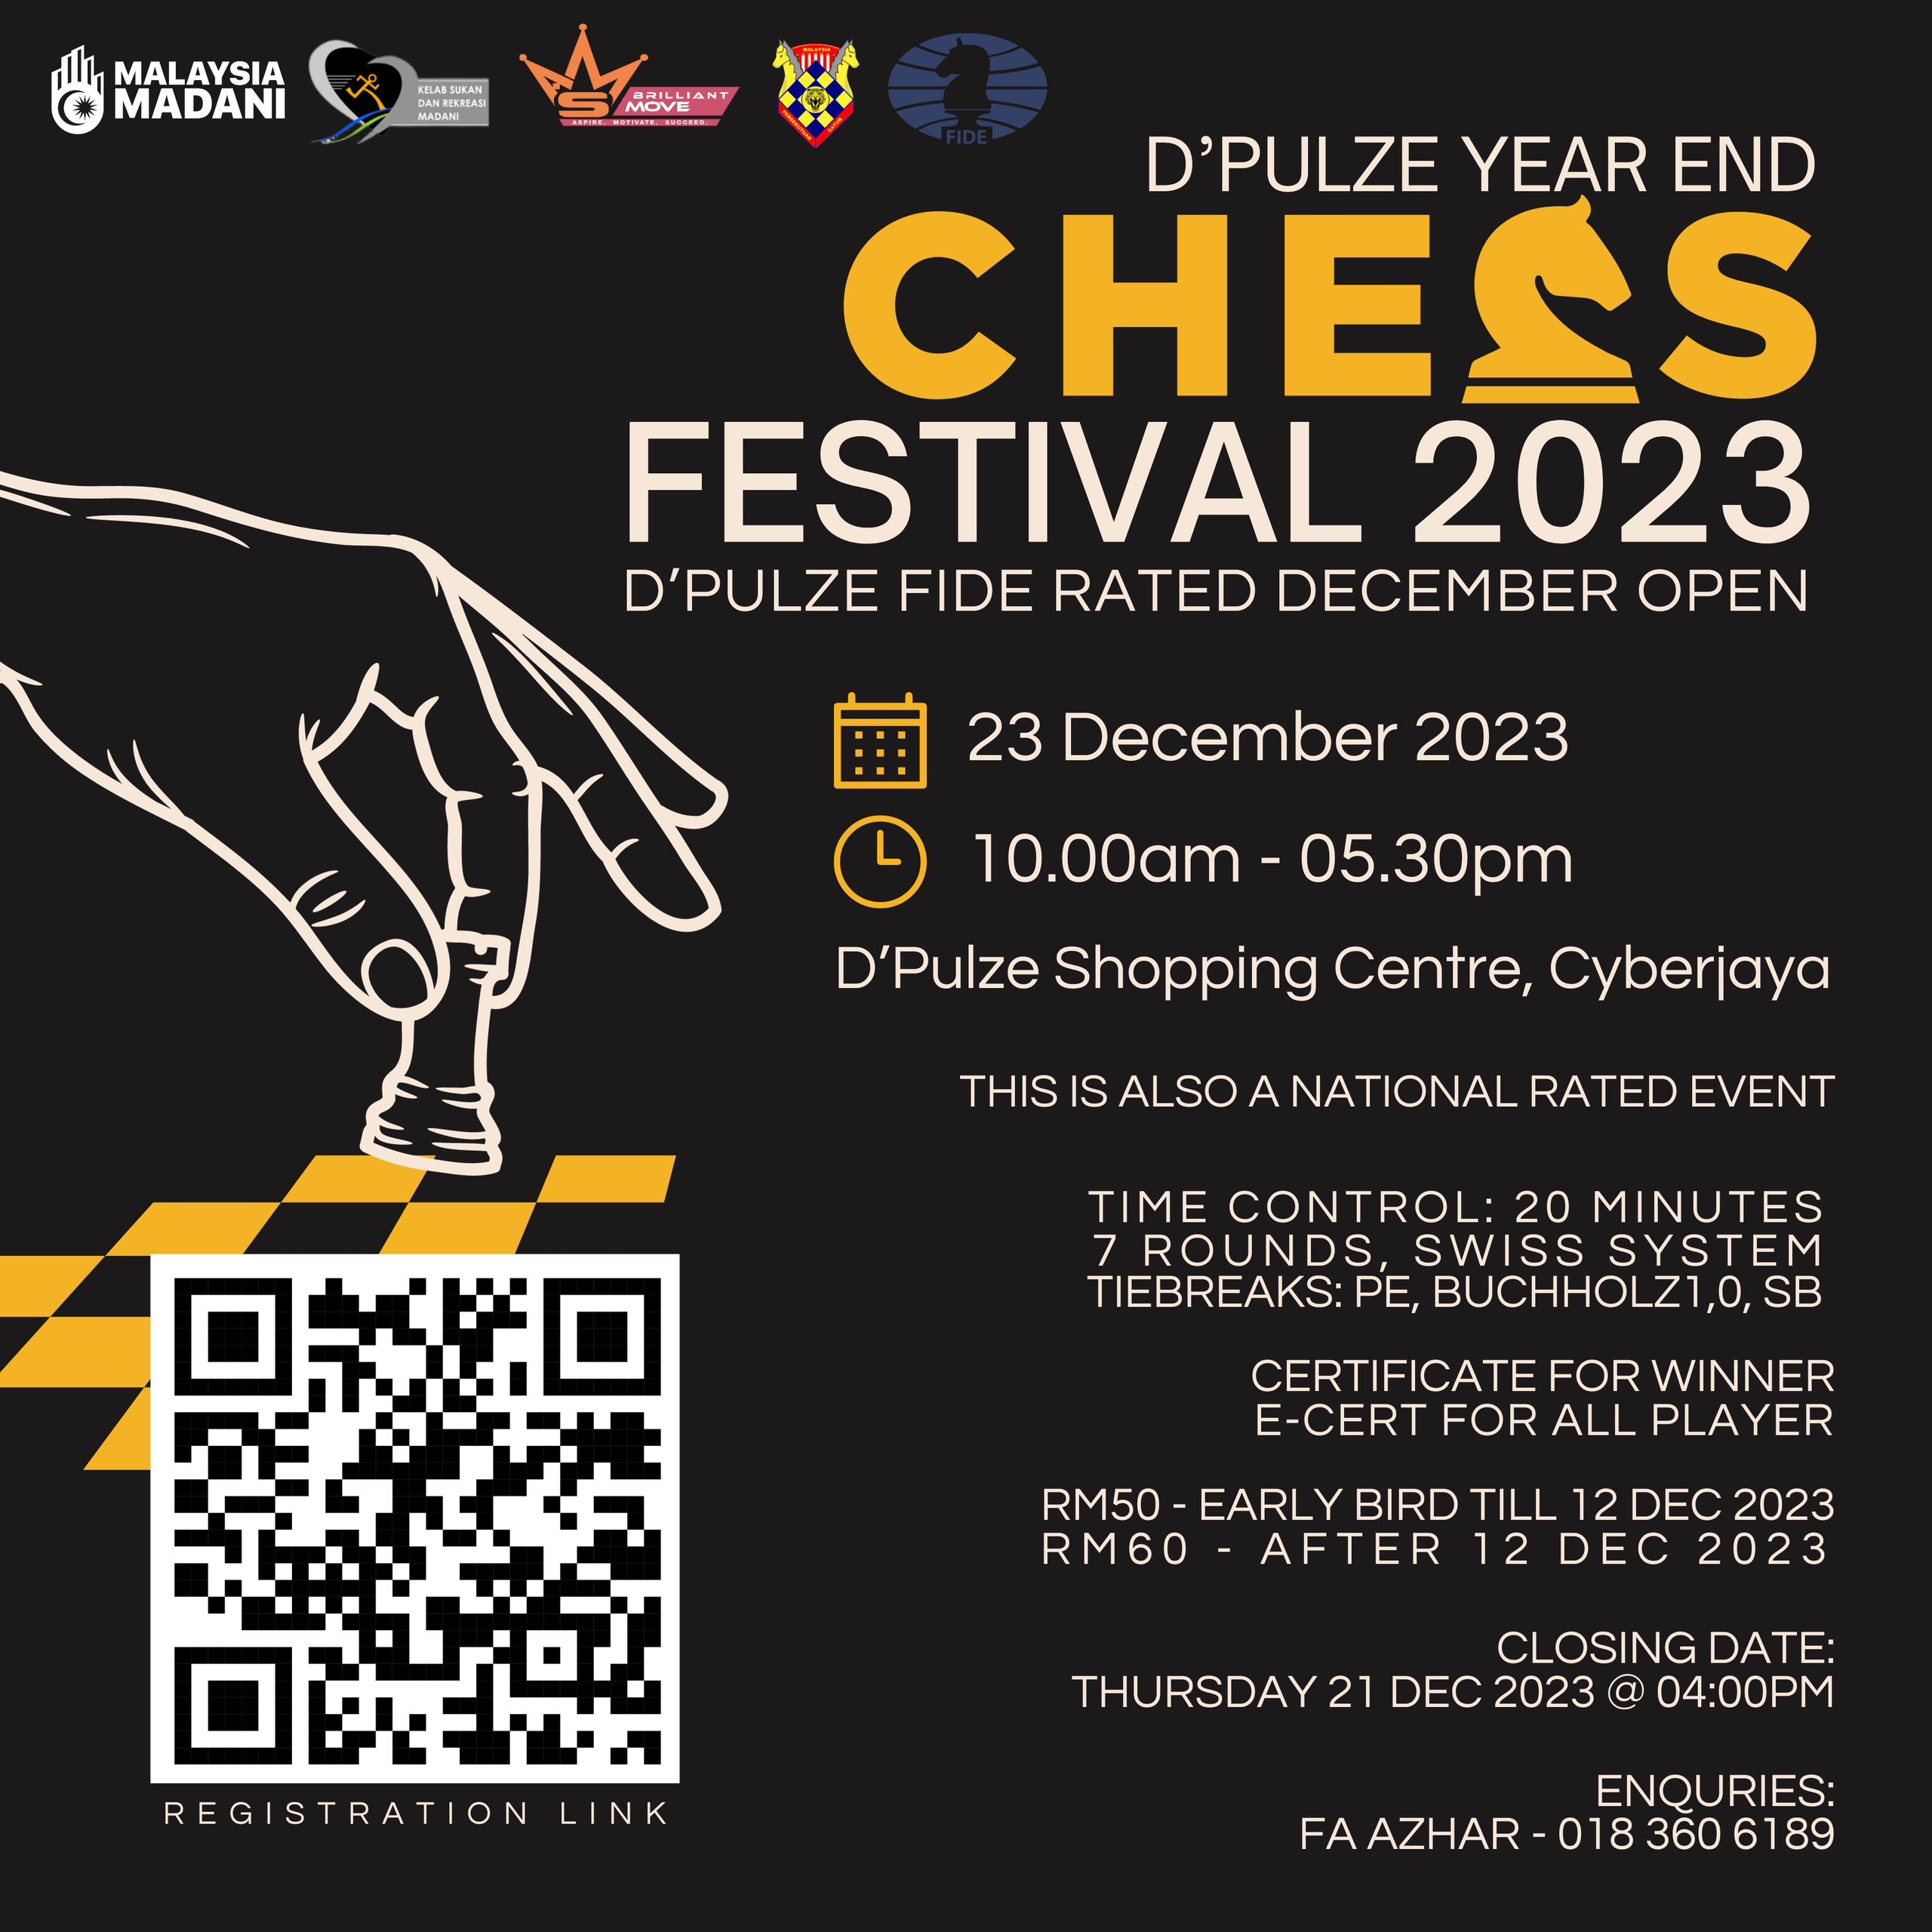 D'PULZE YEAR END CHESS FESTIVALS 2023